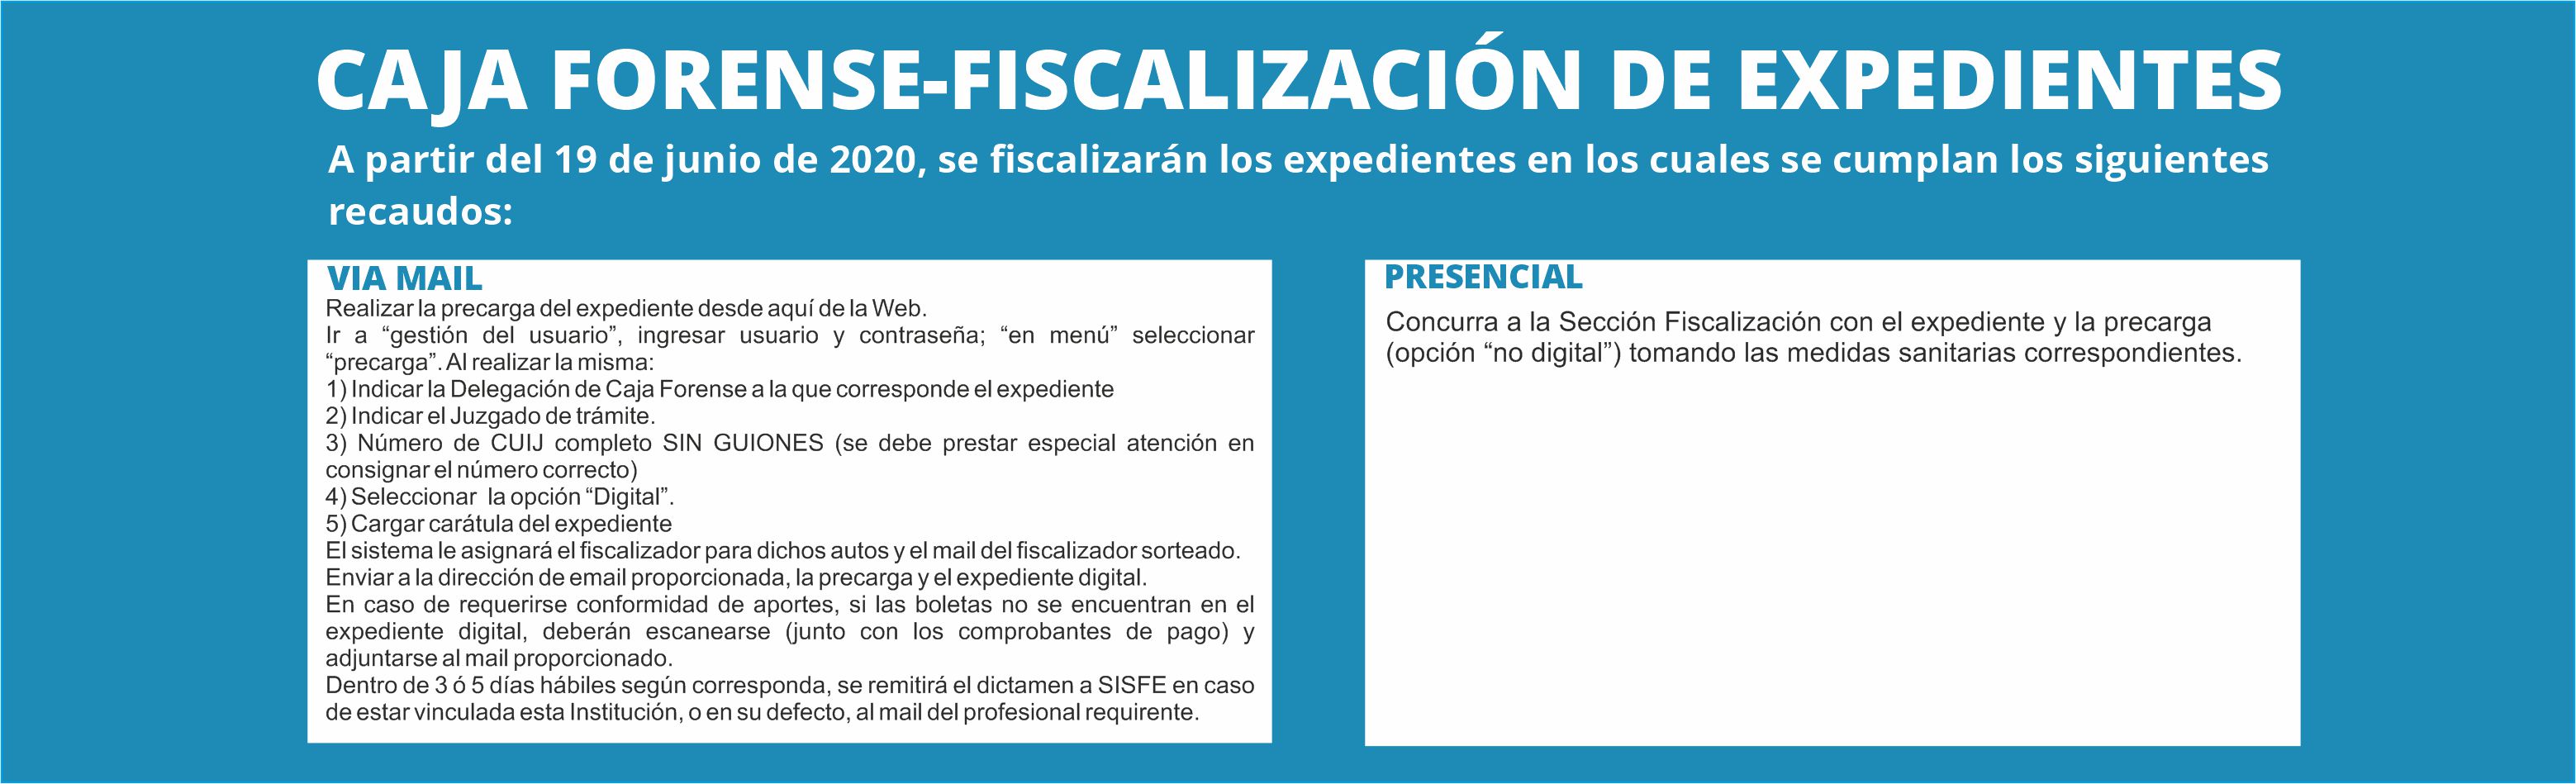 fiscalizacion-expendientes2021